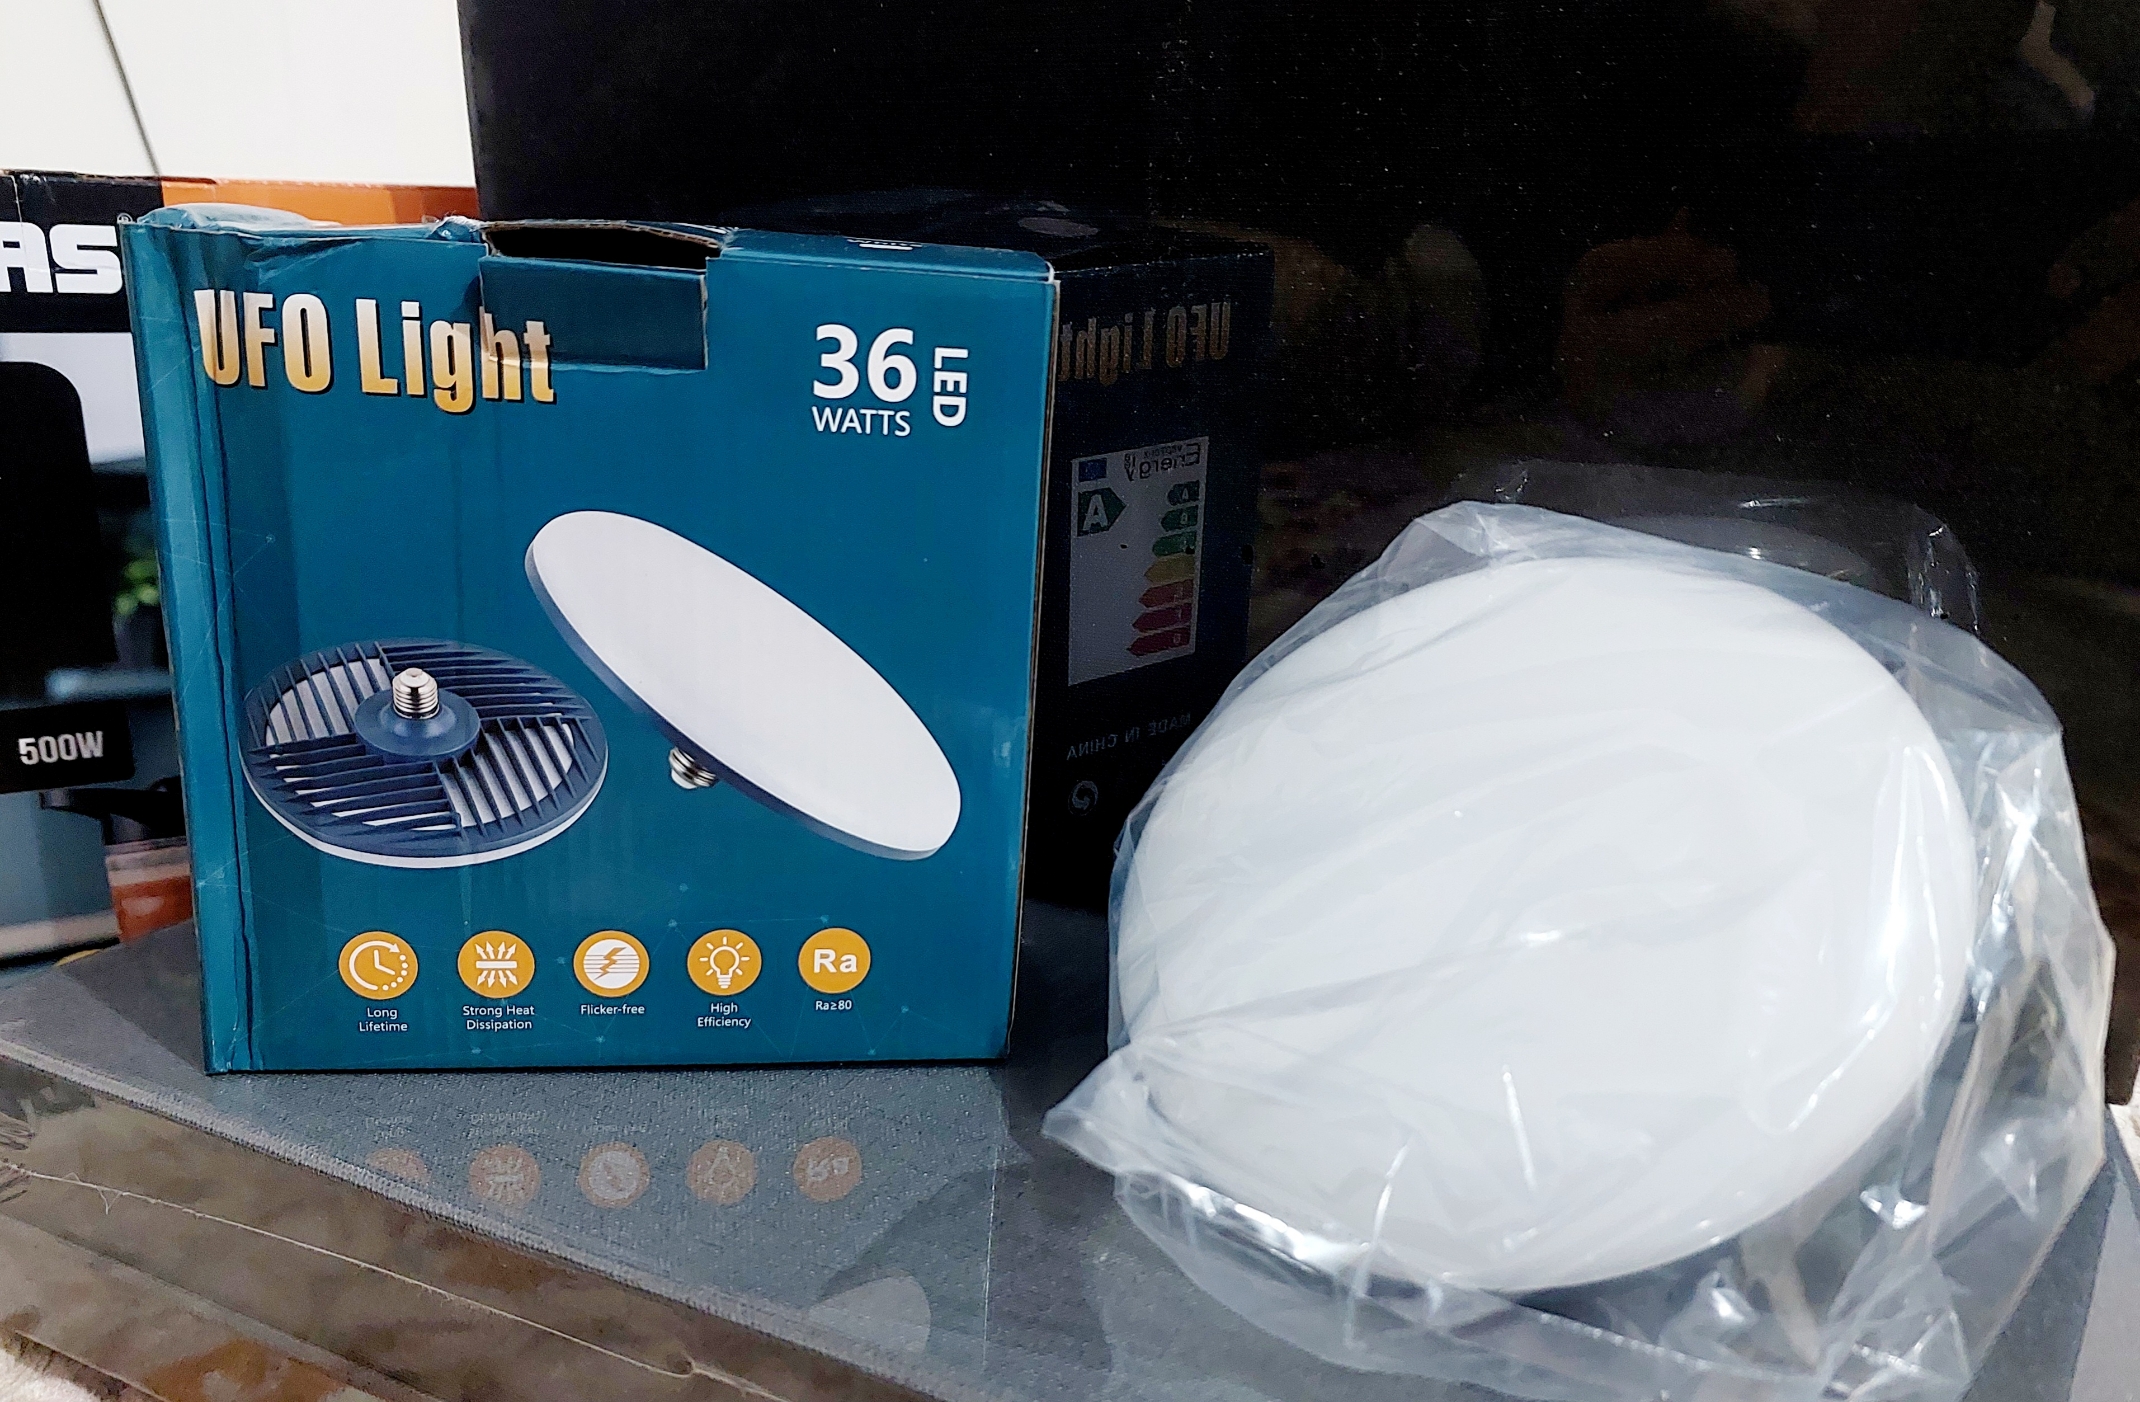 لامپ ۳۶ وات UFO